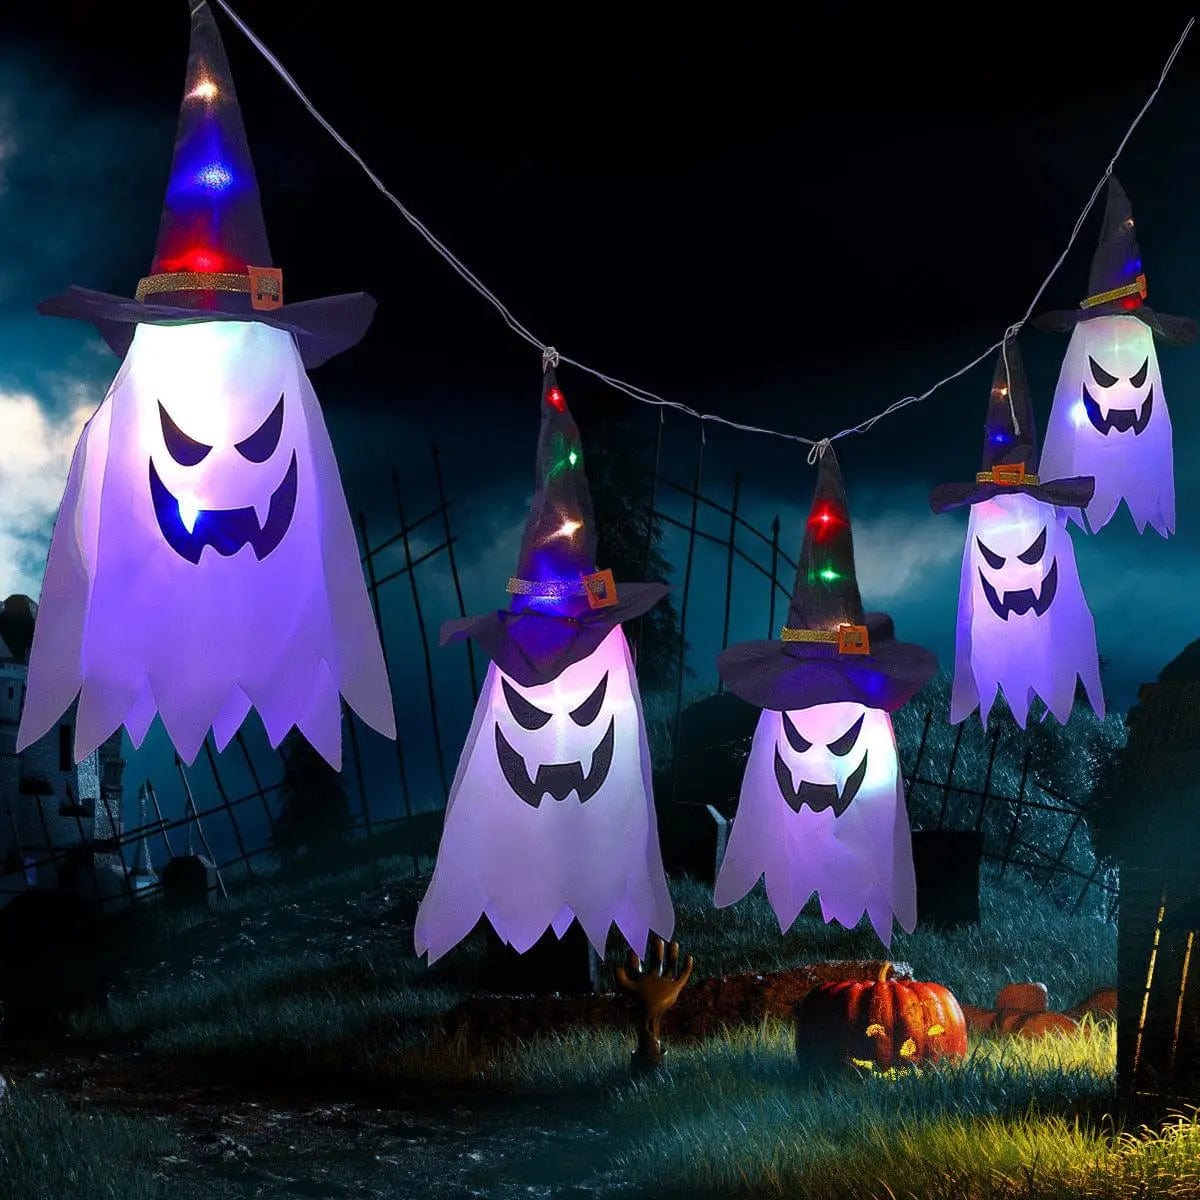 LOVEMI  Costumes halloween Battery5pendantghostcurtai Lovemi -  Halloween Holiday Decoration Lanterns Cloth Art Ghost